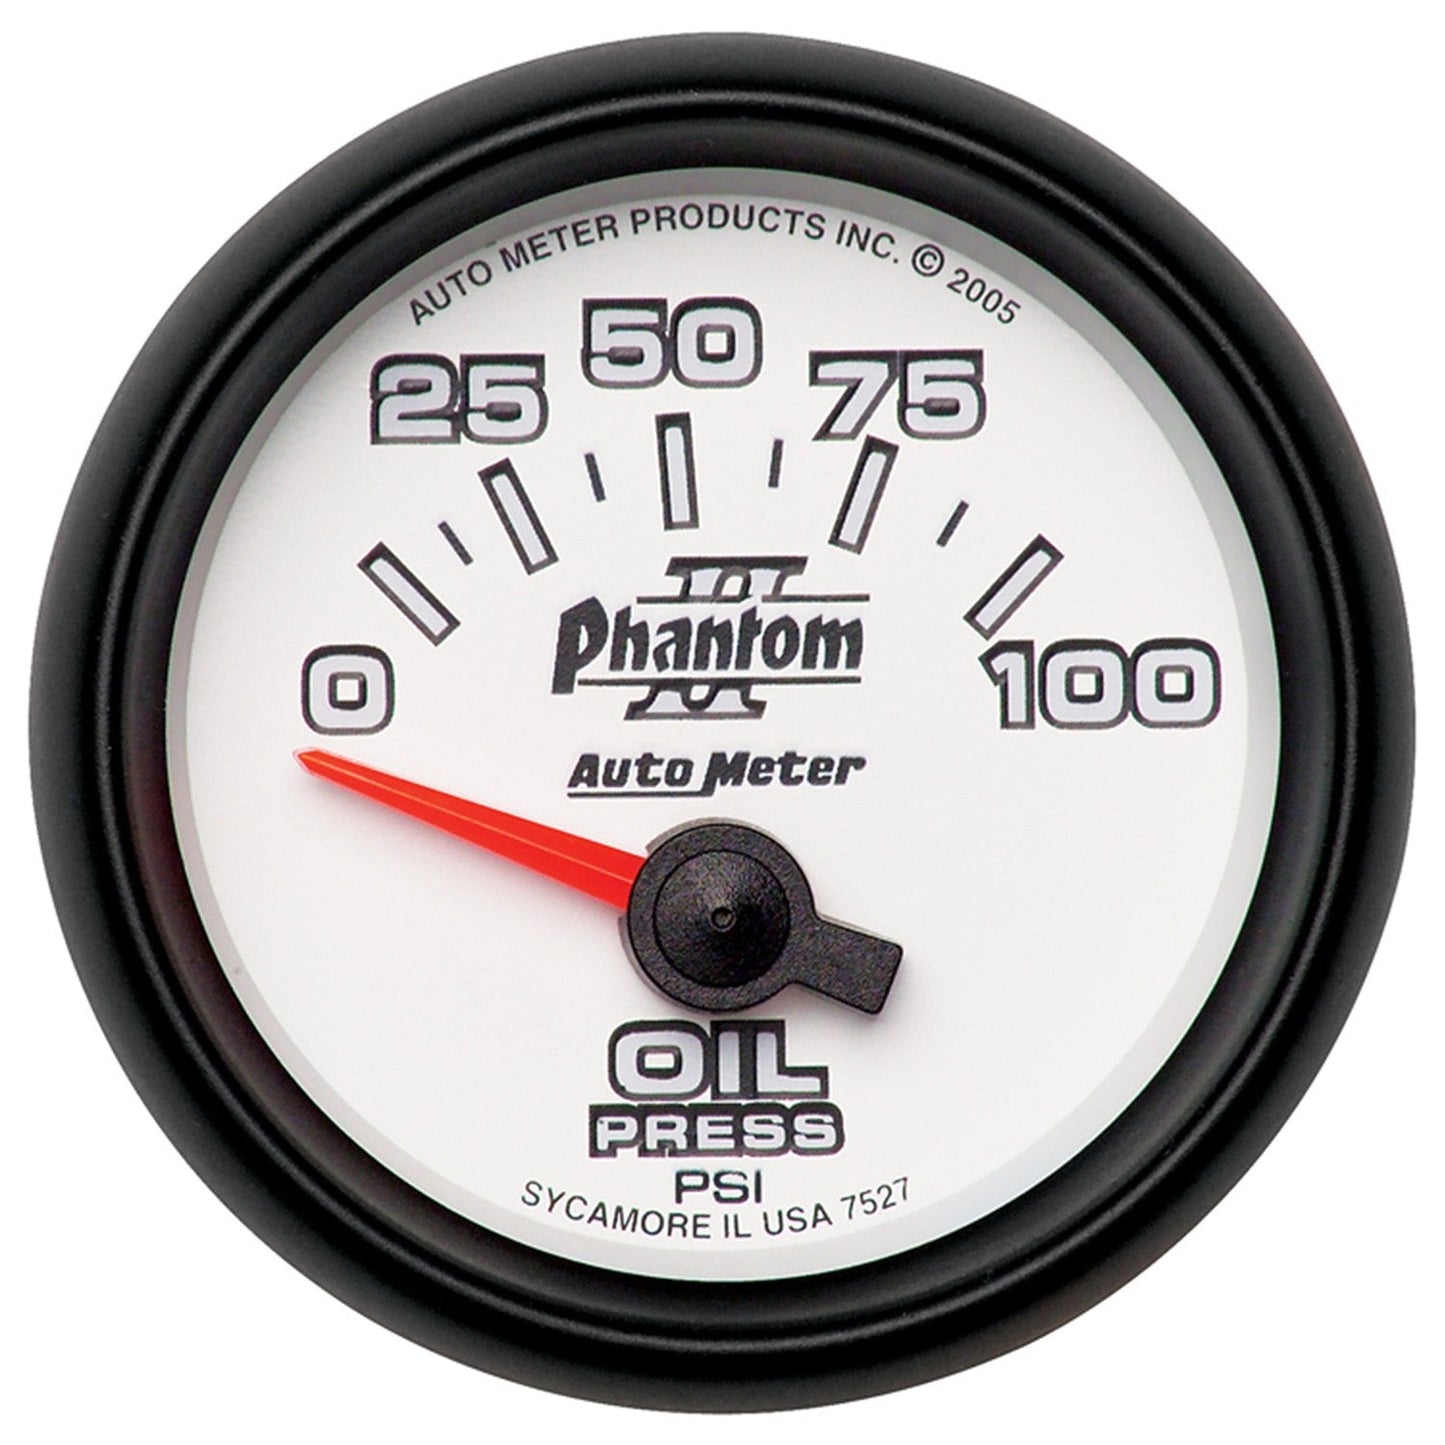 AutoMeter - 2-1/16" OIL PRESSURE, 0-100 PSI, AIR-CORE, PHANTOM II (7527)